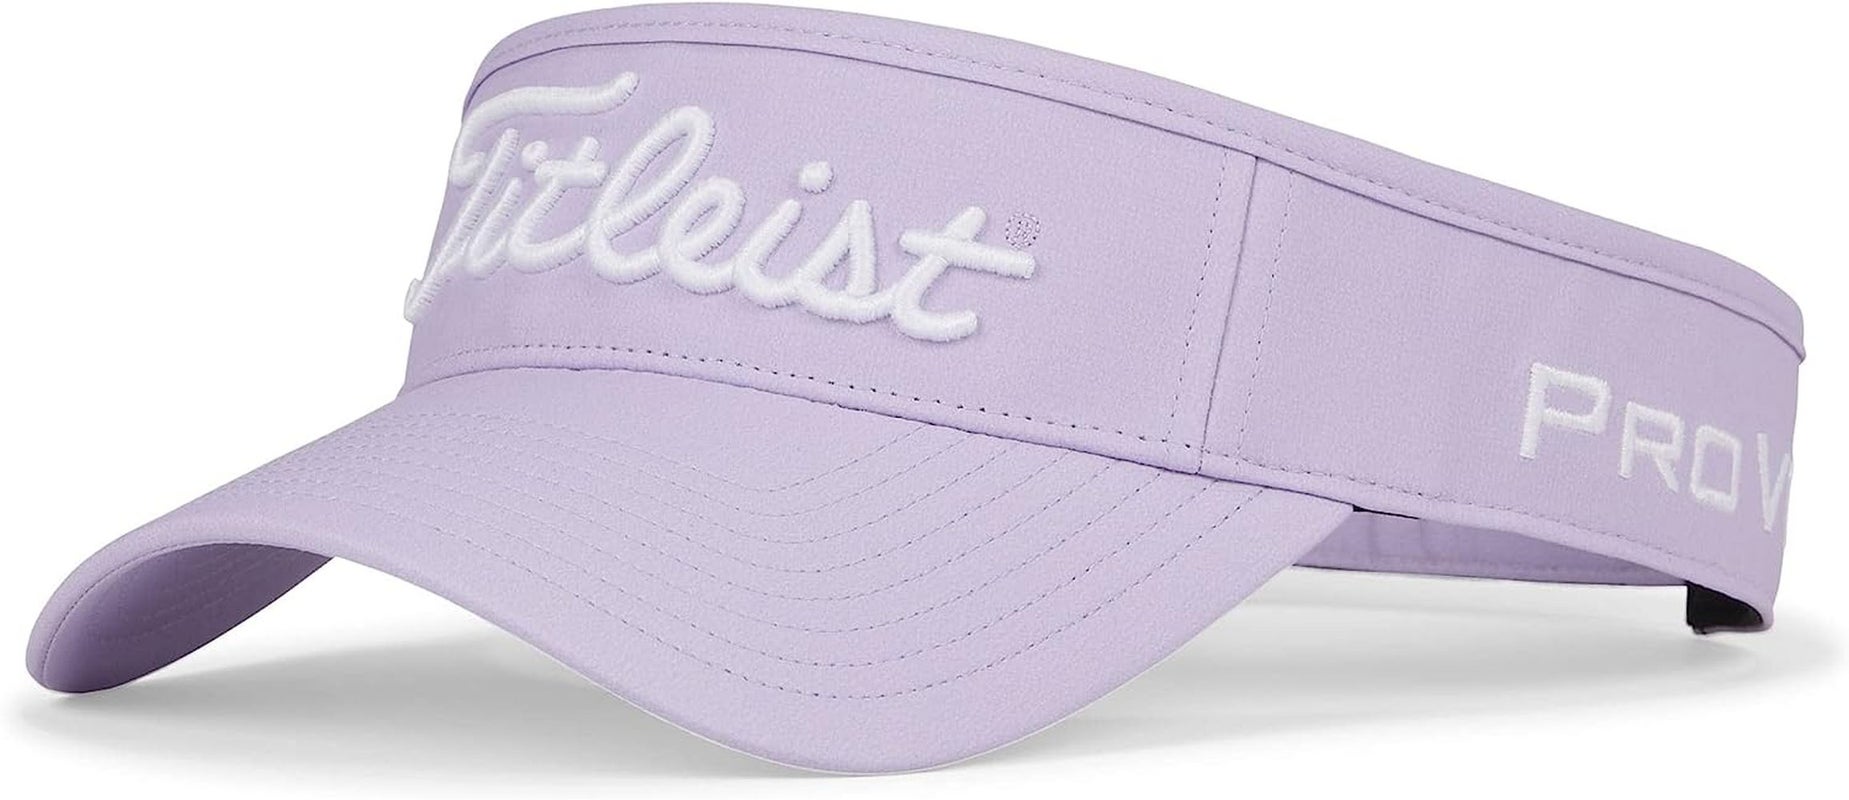 Titleist Tour Performance Visor (Purple Cloud/White, Adjustable, 2021) Golf Hat